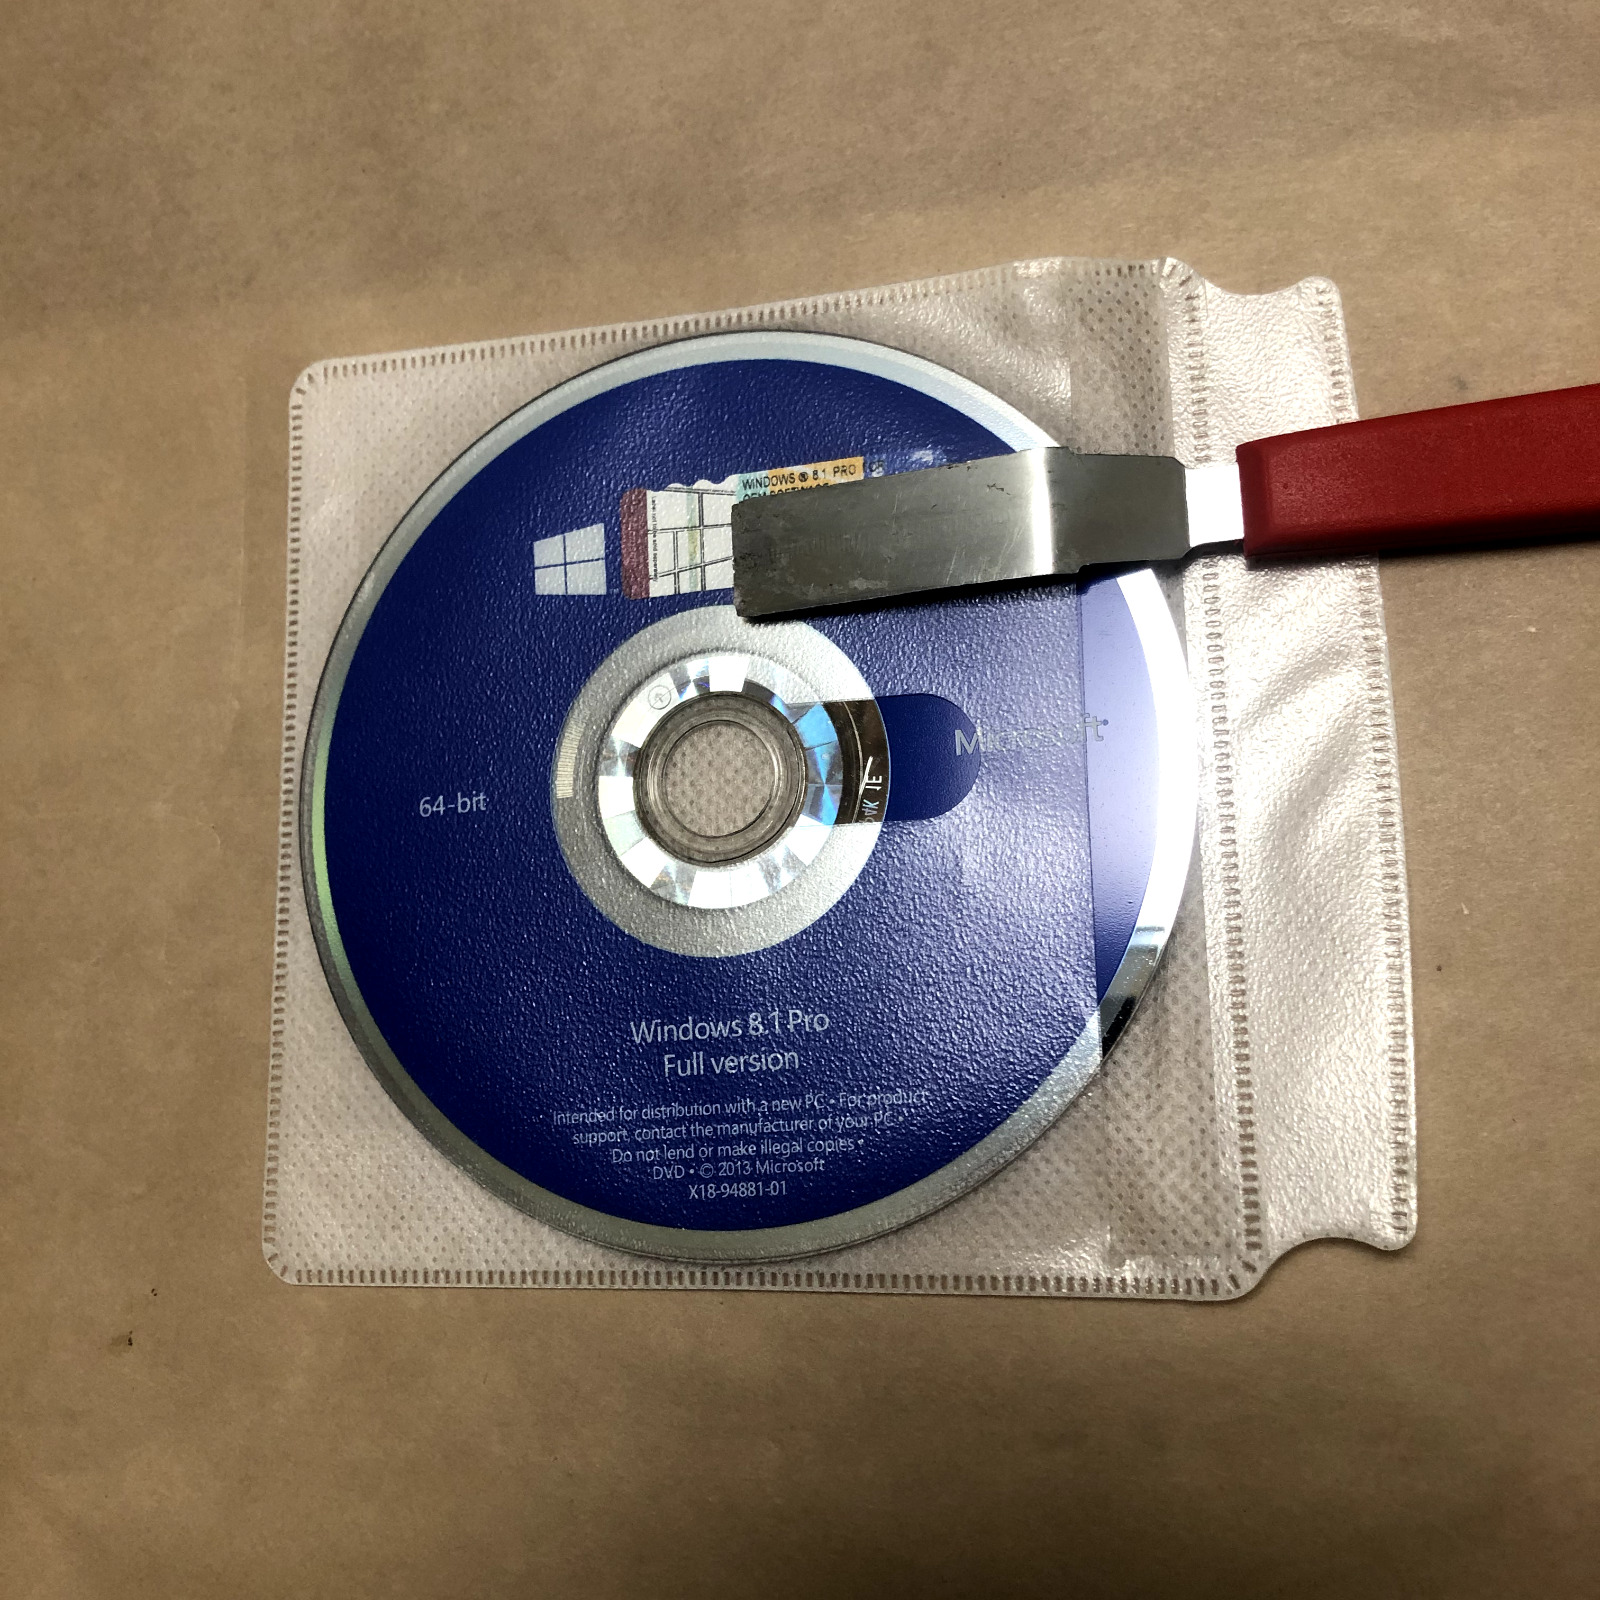 Microsoft Windows 8.1 Pro disc full version 64 bit disc only